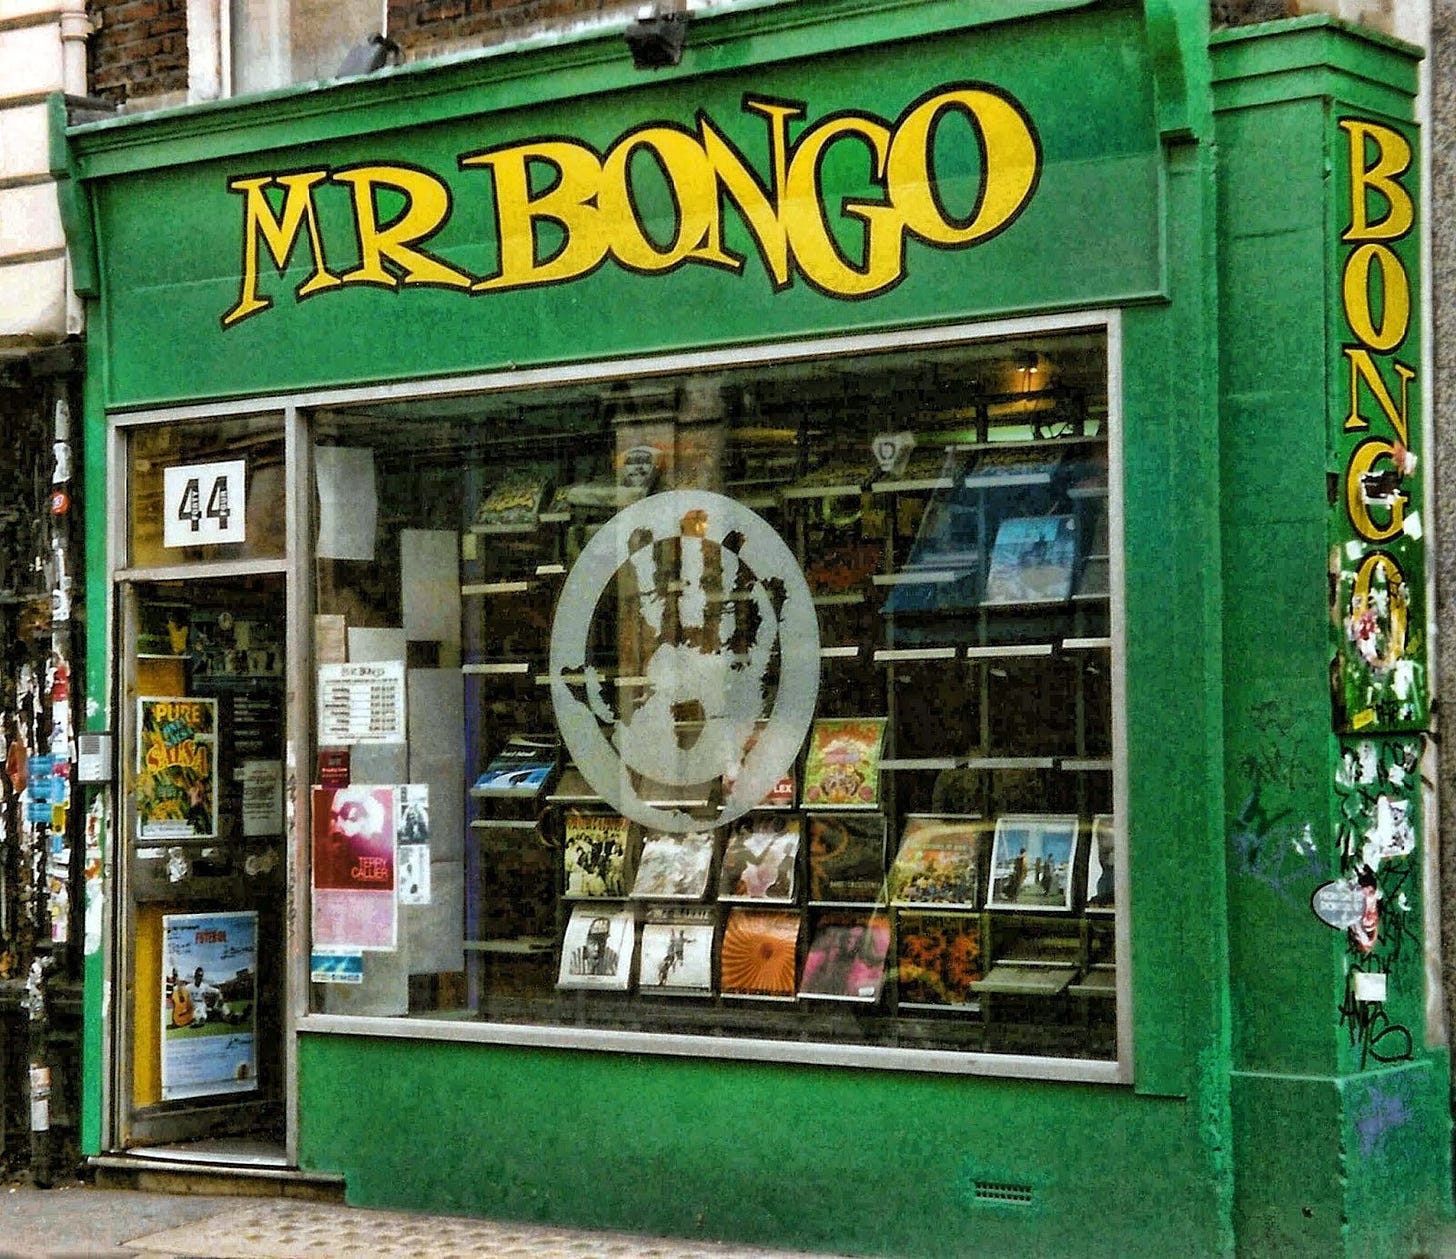 About – Mr Bongo